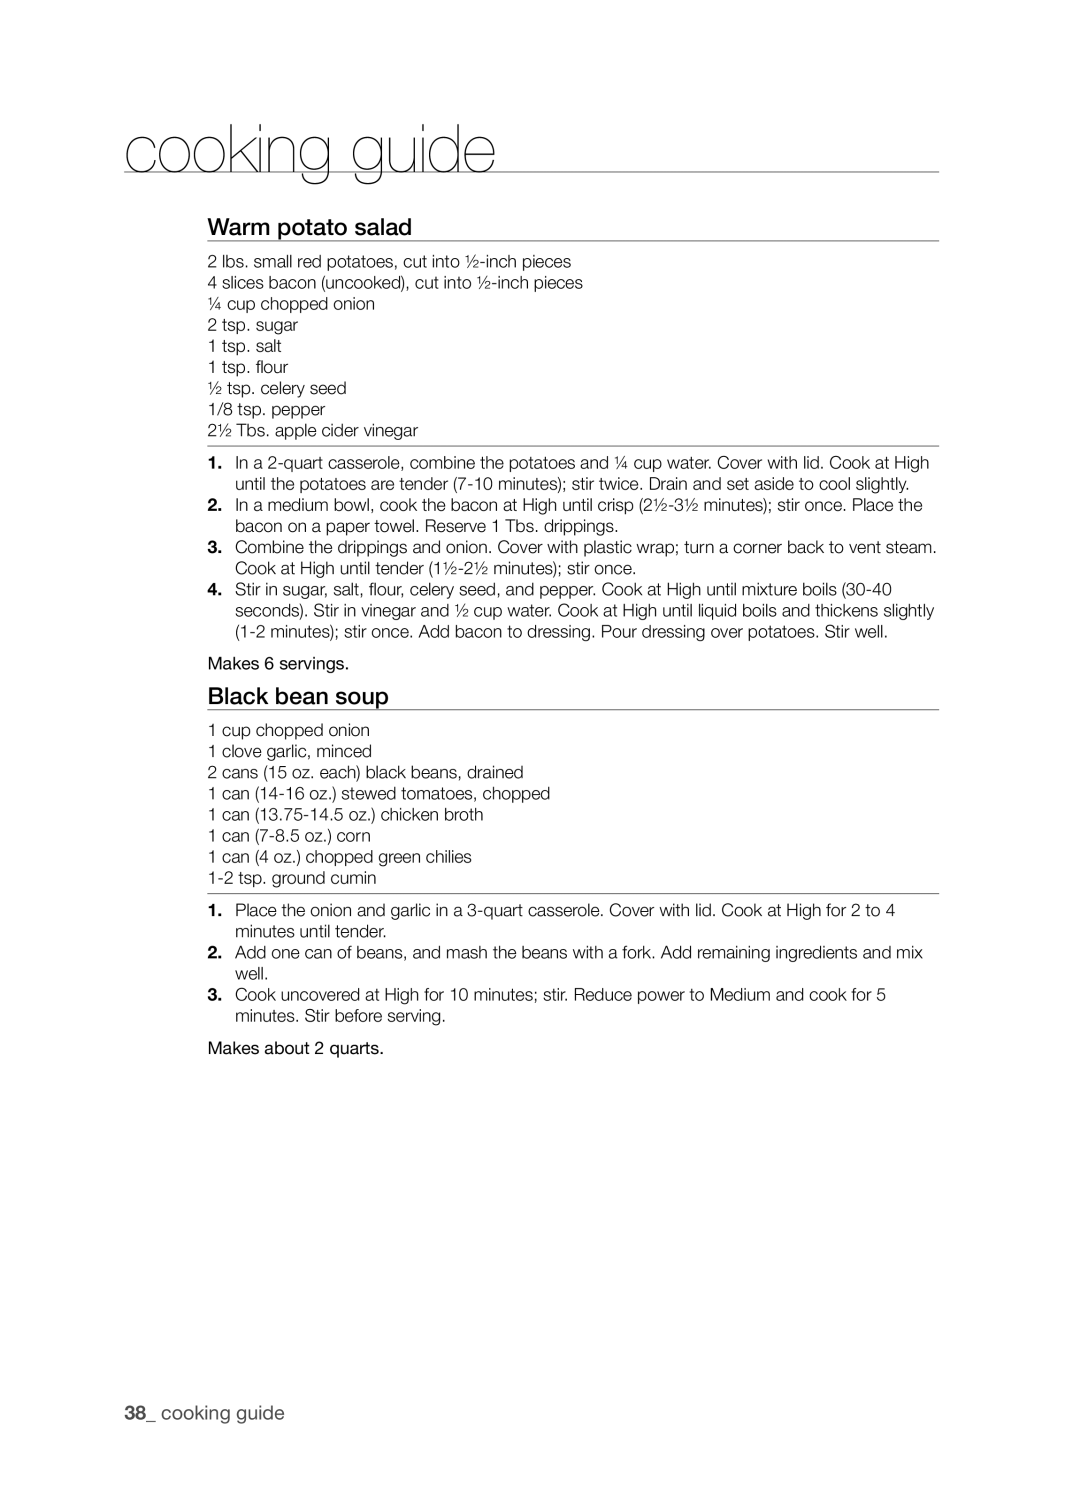 Samsung SMH9207ST user manual Warm potato salad, Black bean soup, cooking guide 